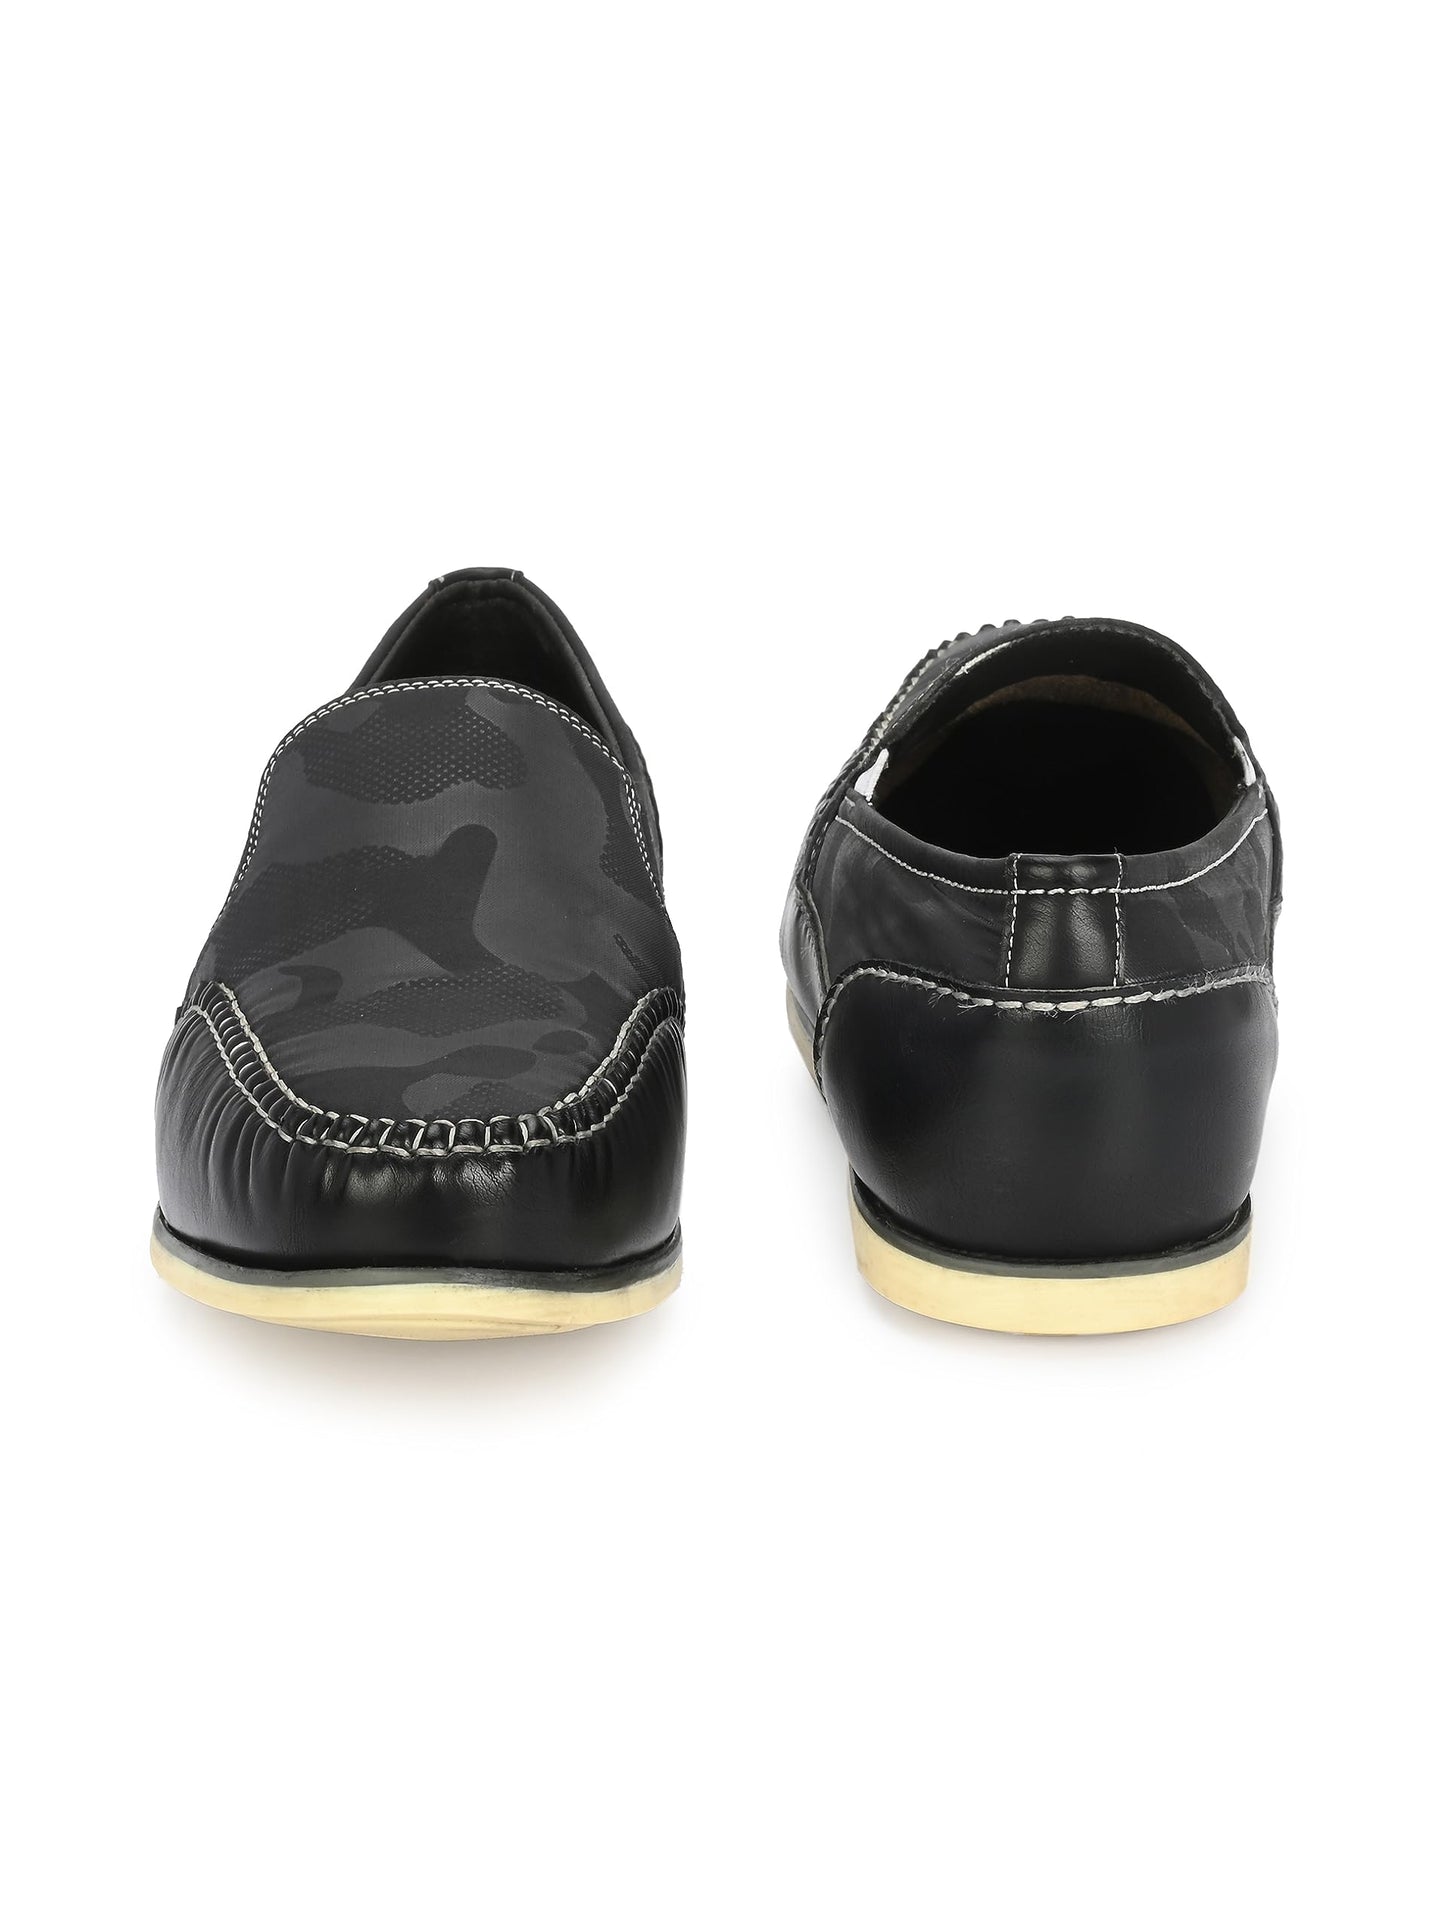 HITZ Men's Black Leather Moccasins Boat Shoes - 5